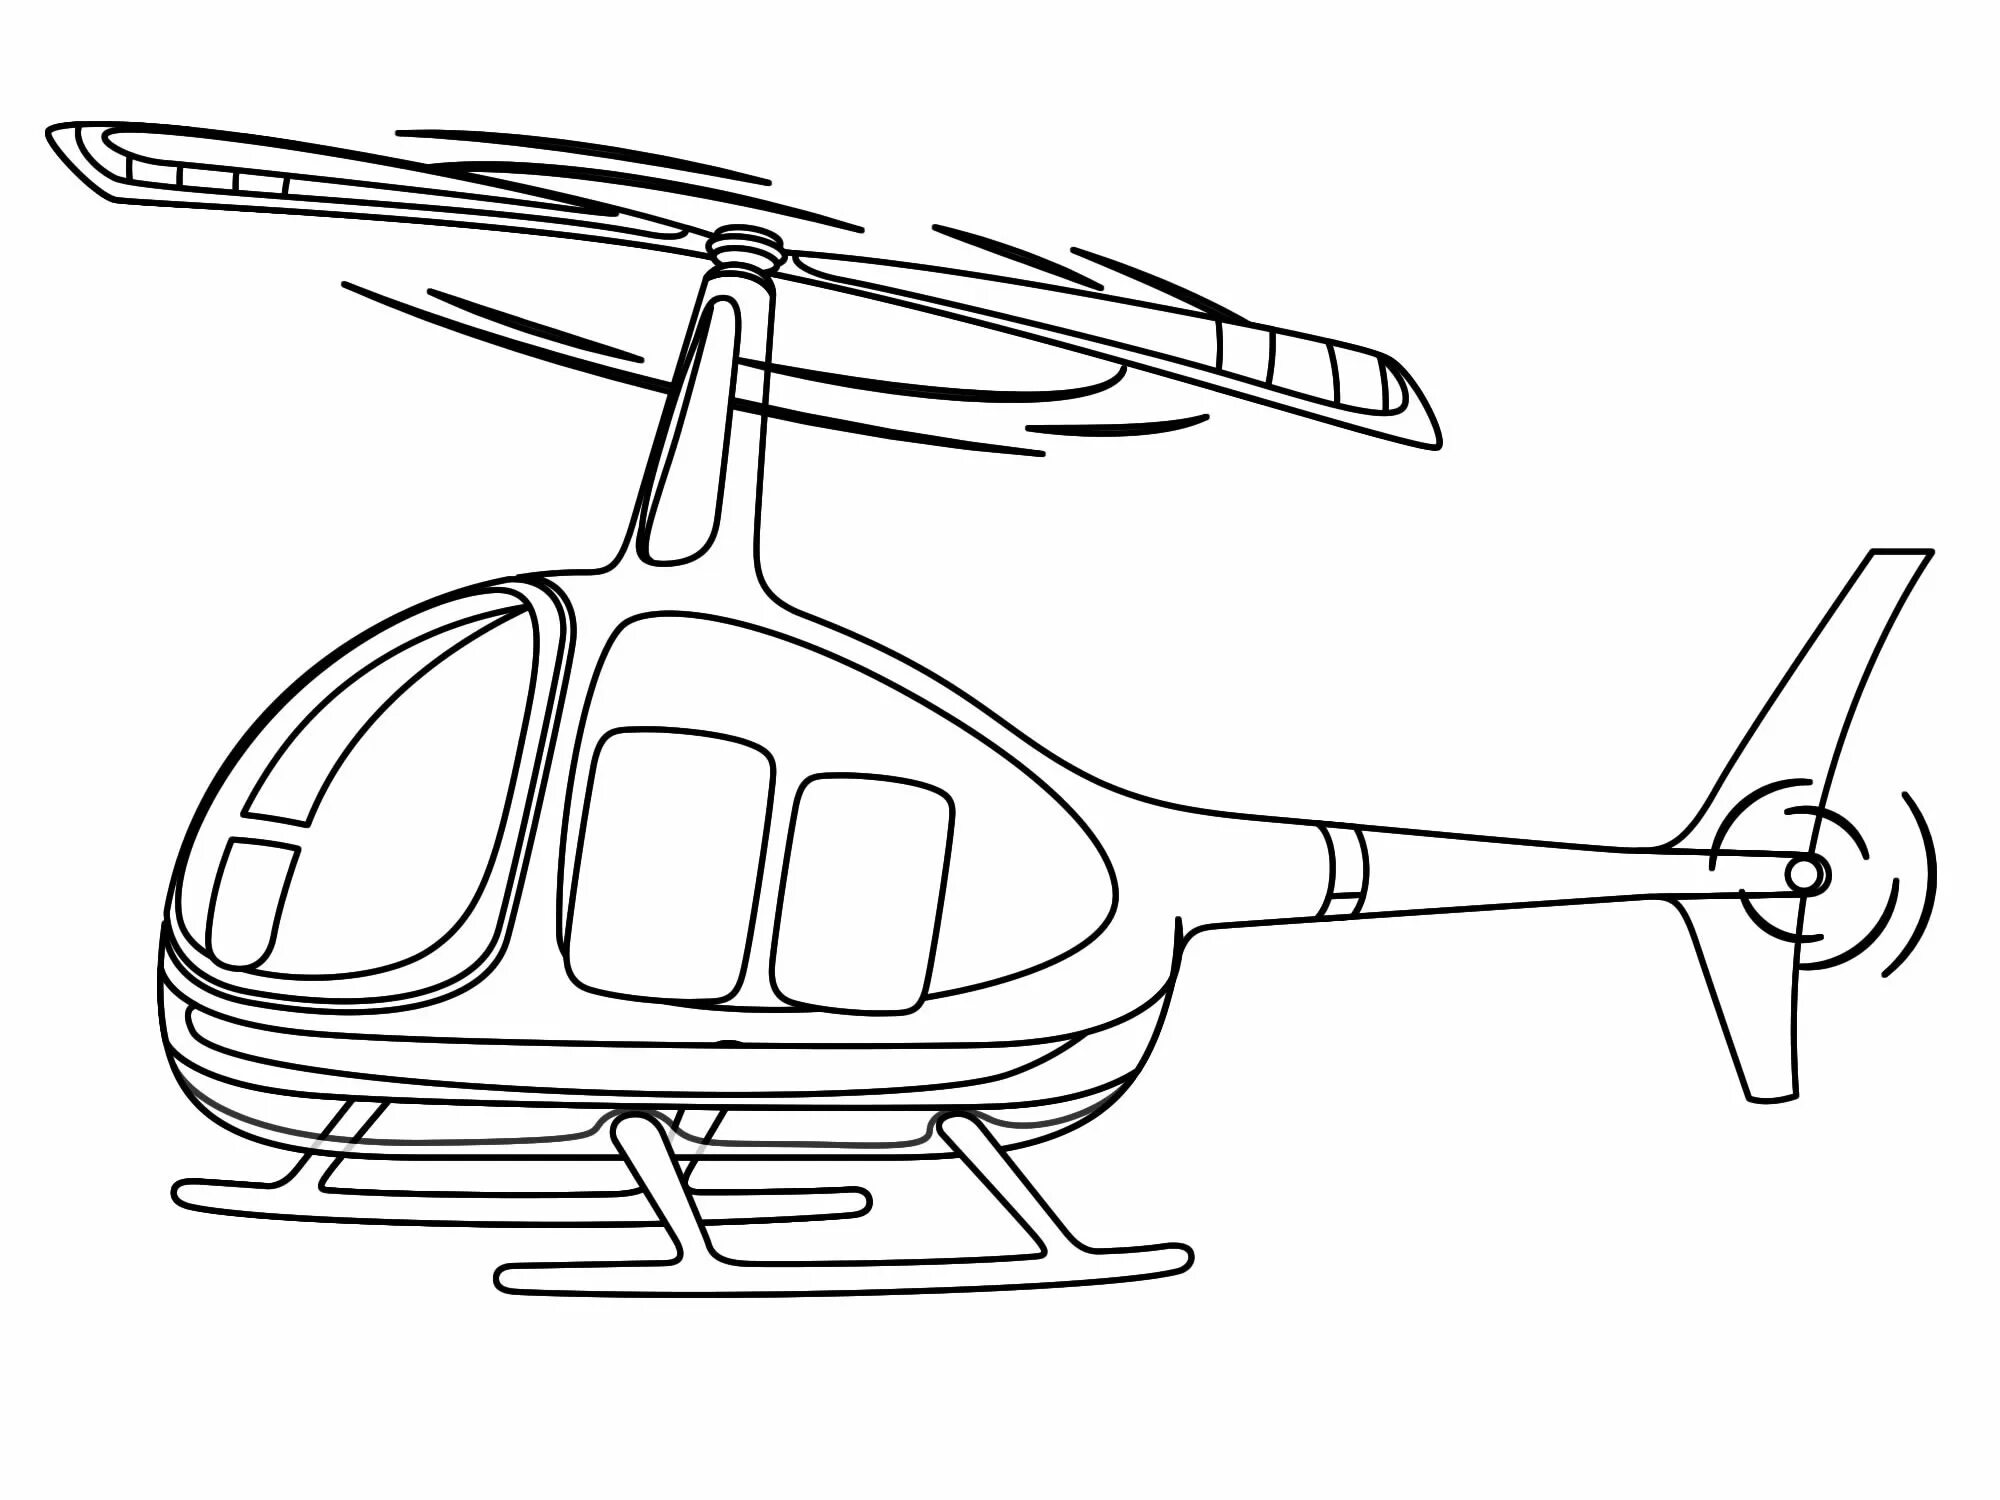 Children's helicopter #24